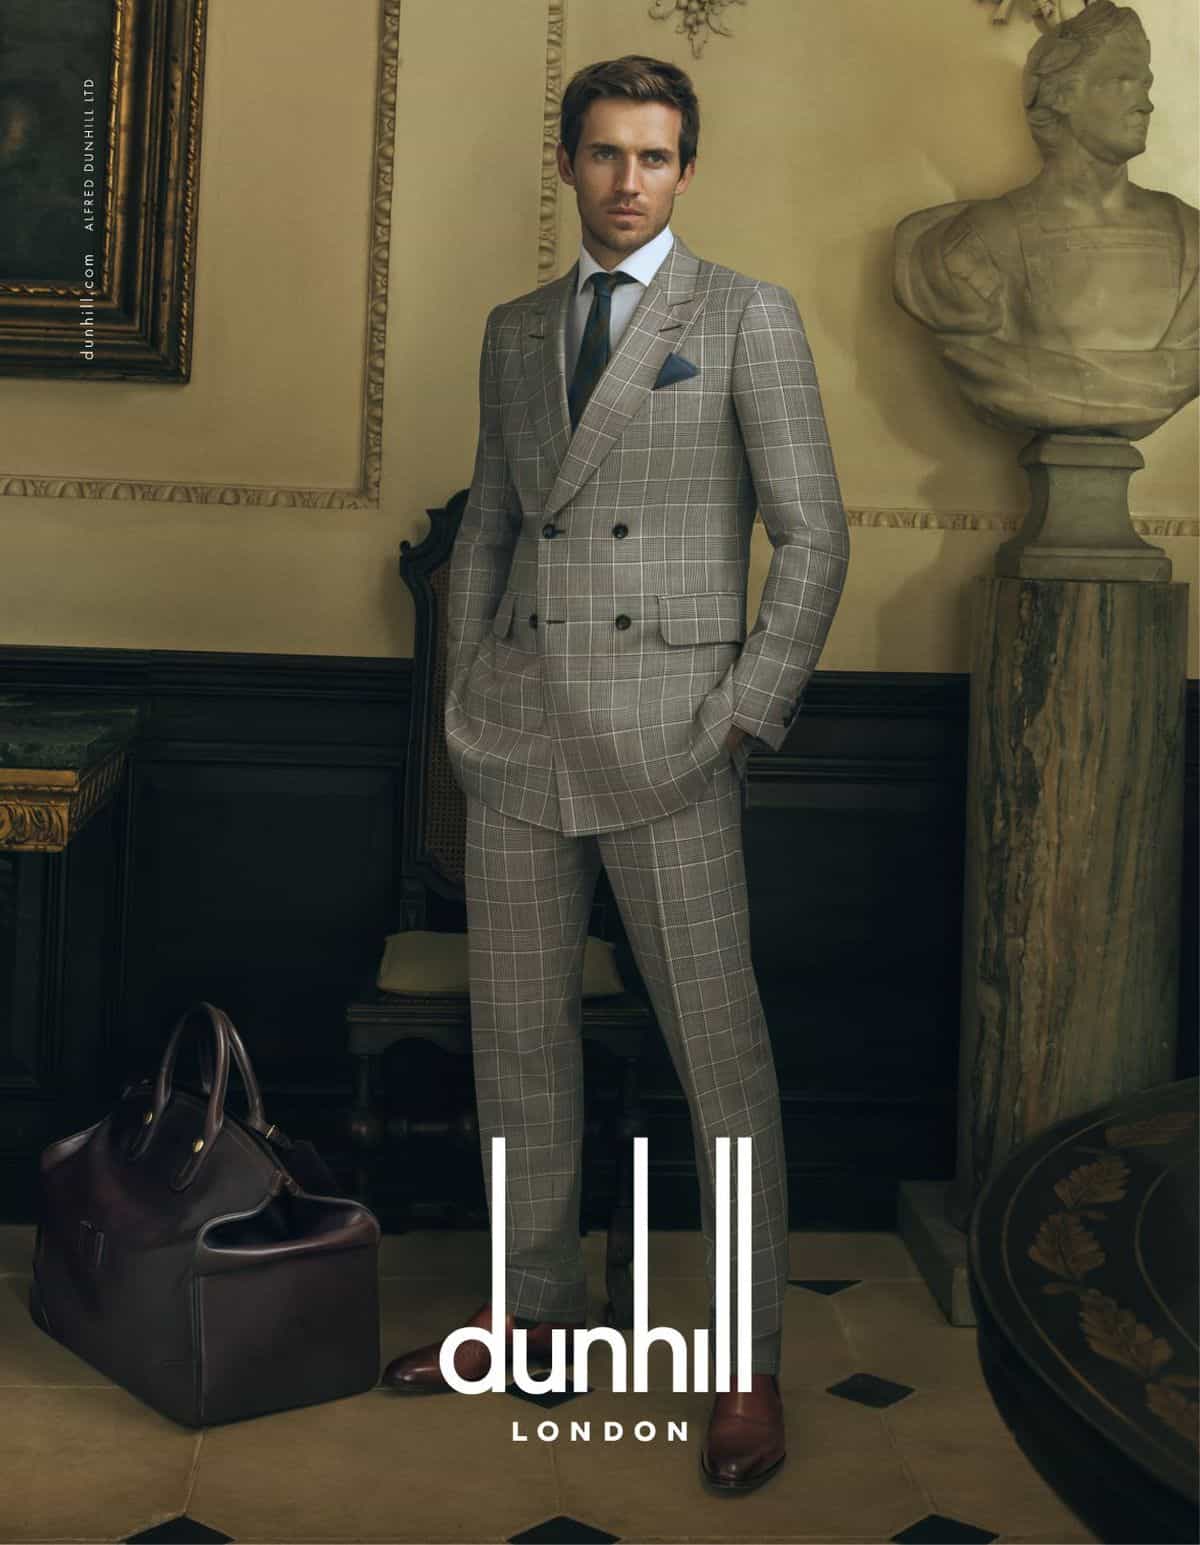 Dunhill suit